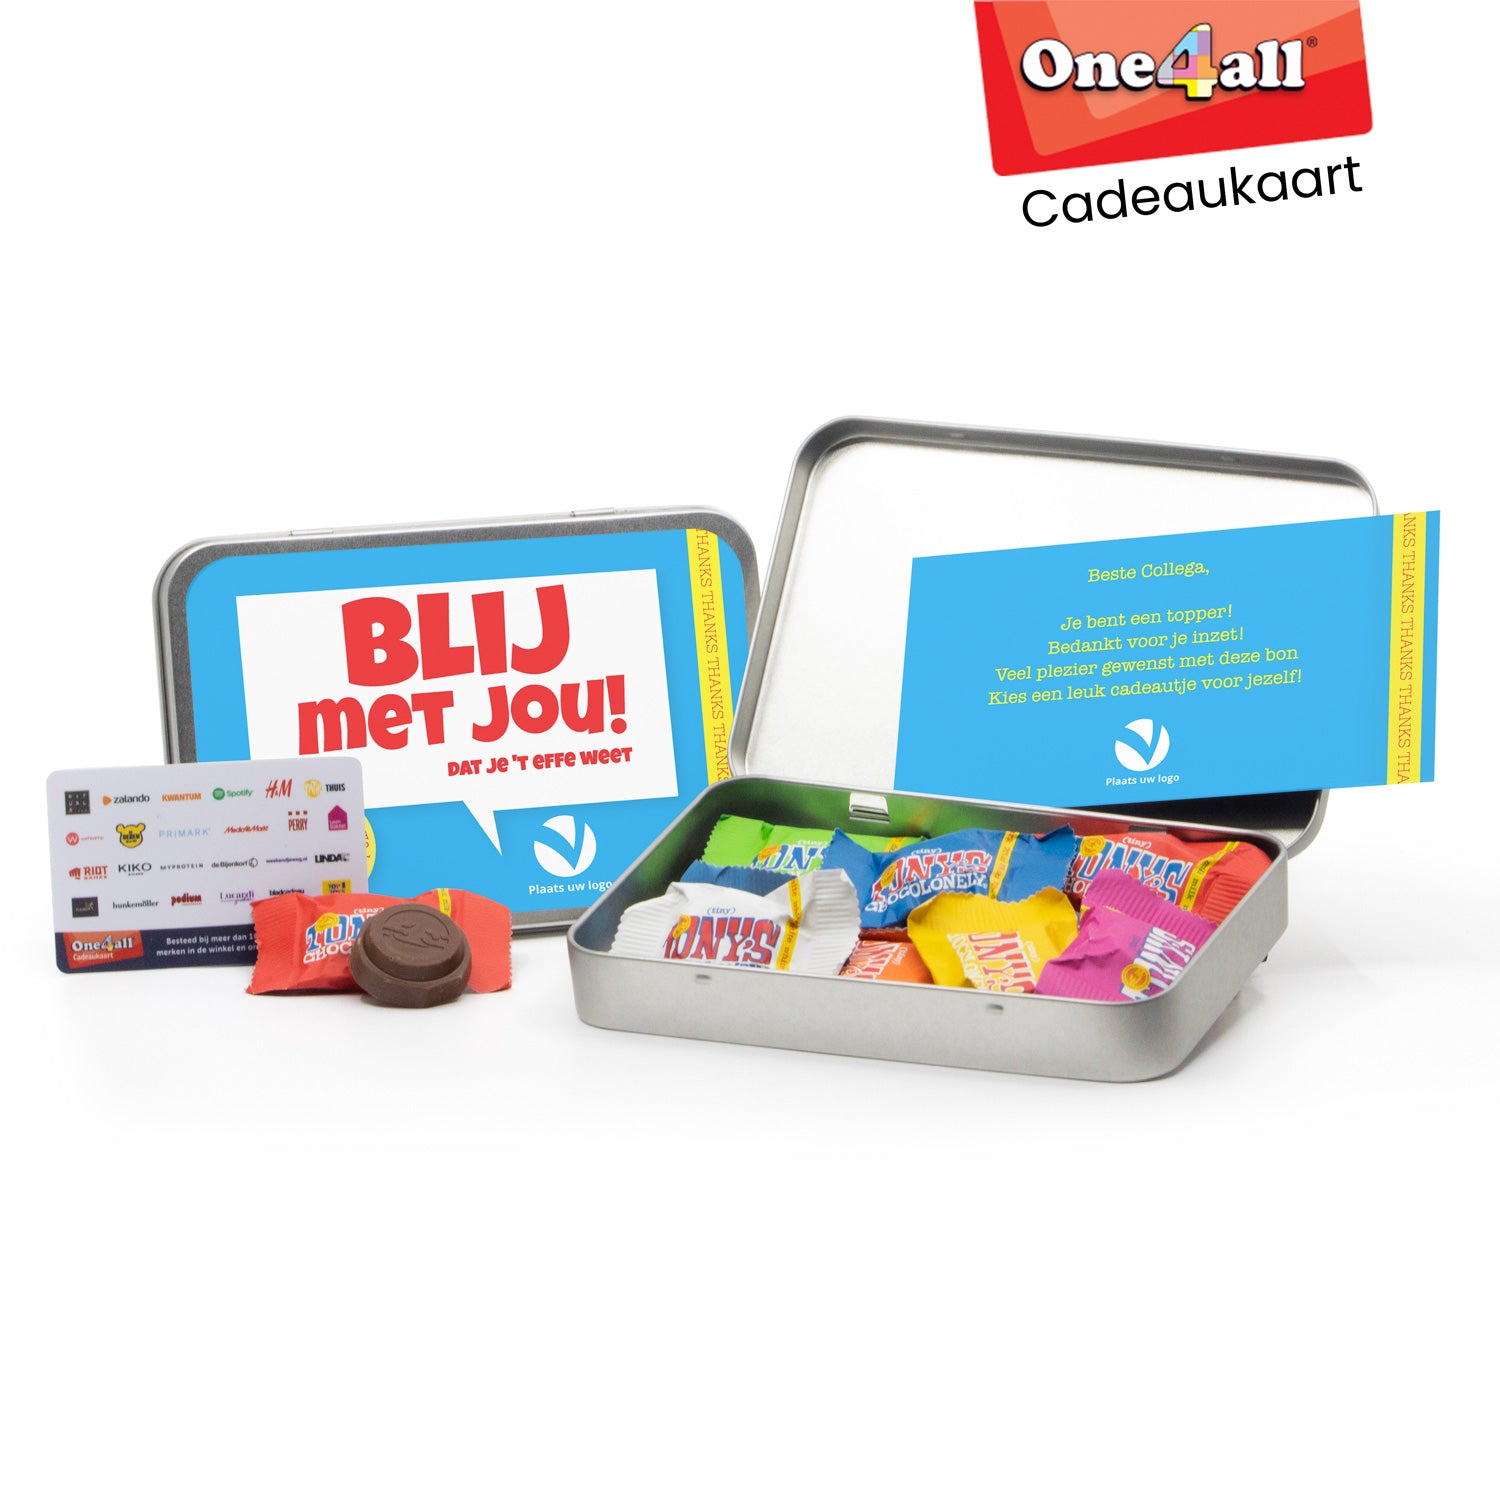 Tiny Tony's in blik met One4All cadeaukaart - Vrijwilliger - Bedankjes.nl